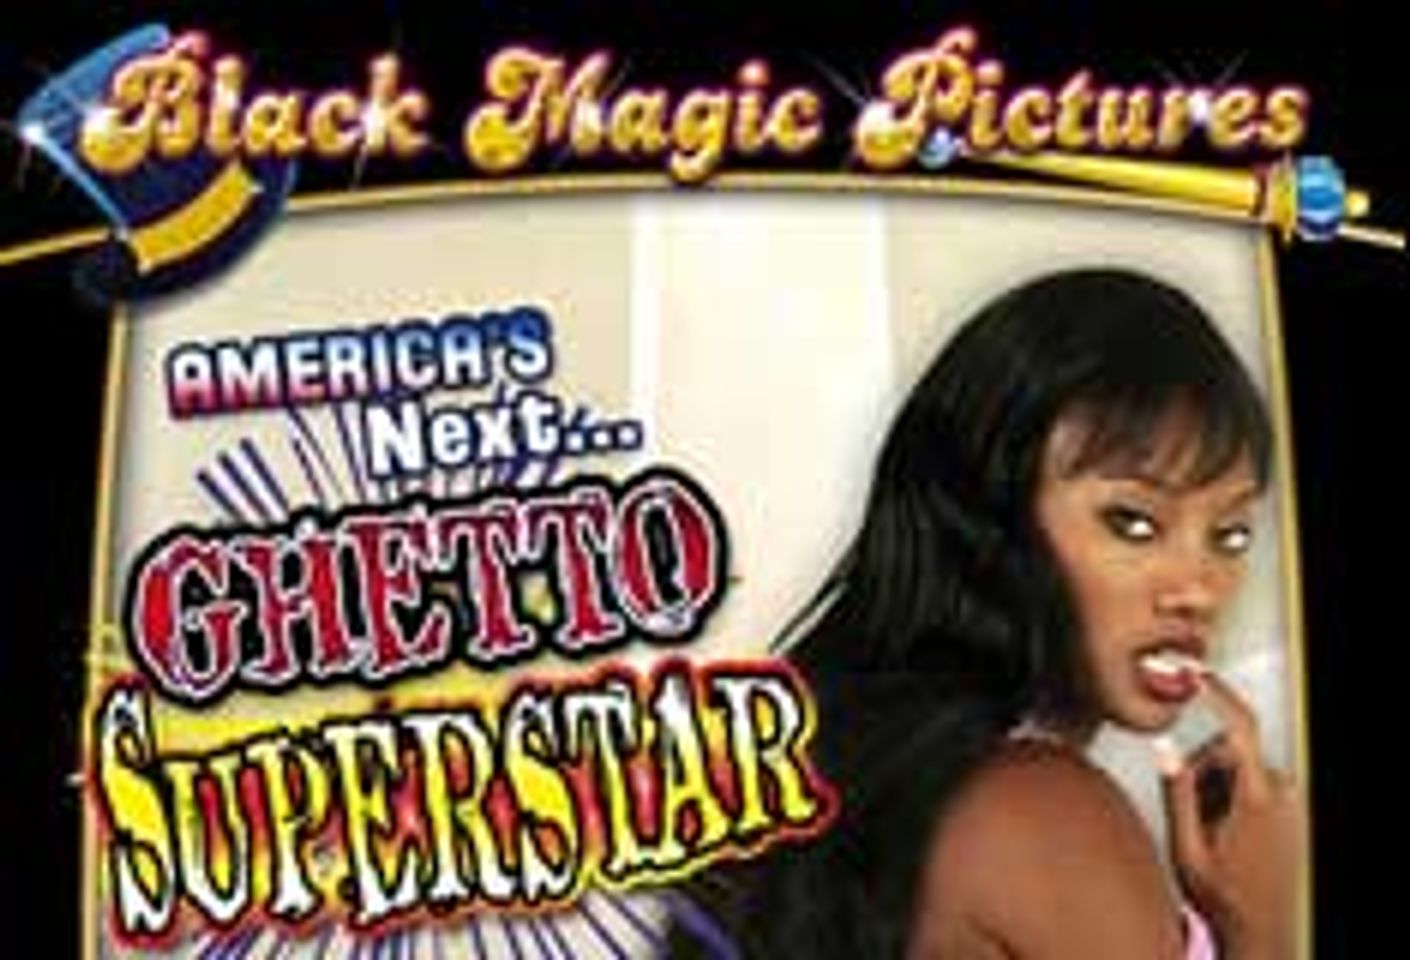 Black Magic Pictures Presents <i>America's Next Ghetto Superstar</i>